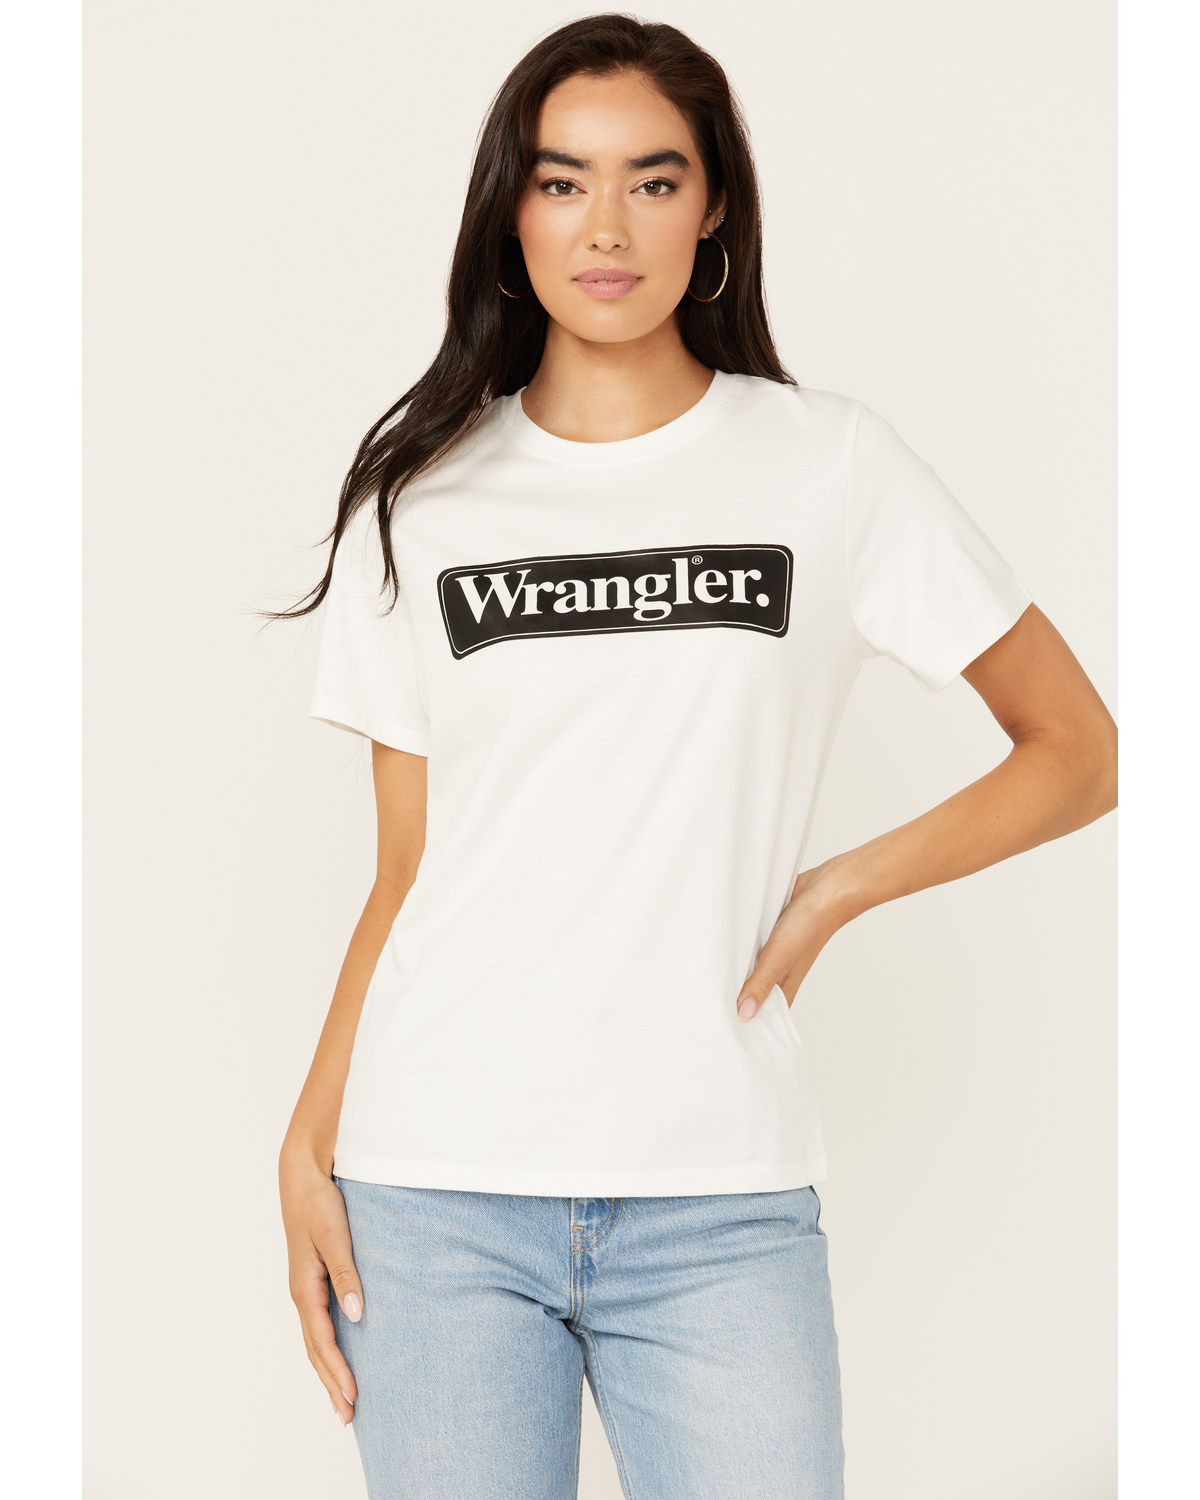 Wrangler Women's Block Logo Tee